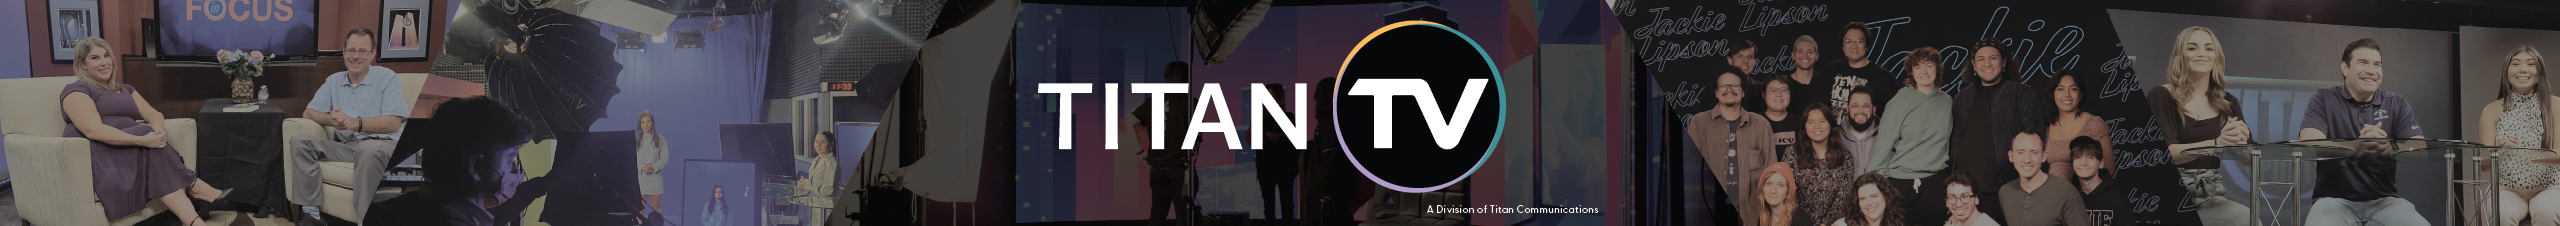 titan tv banner